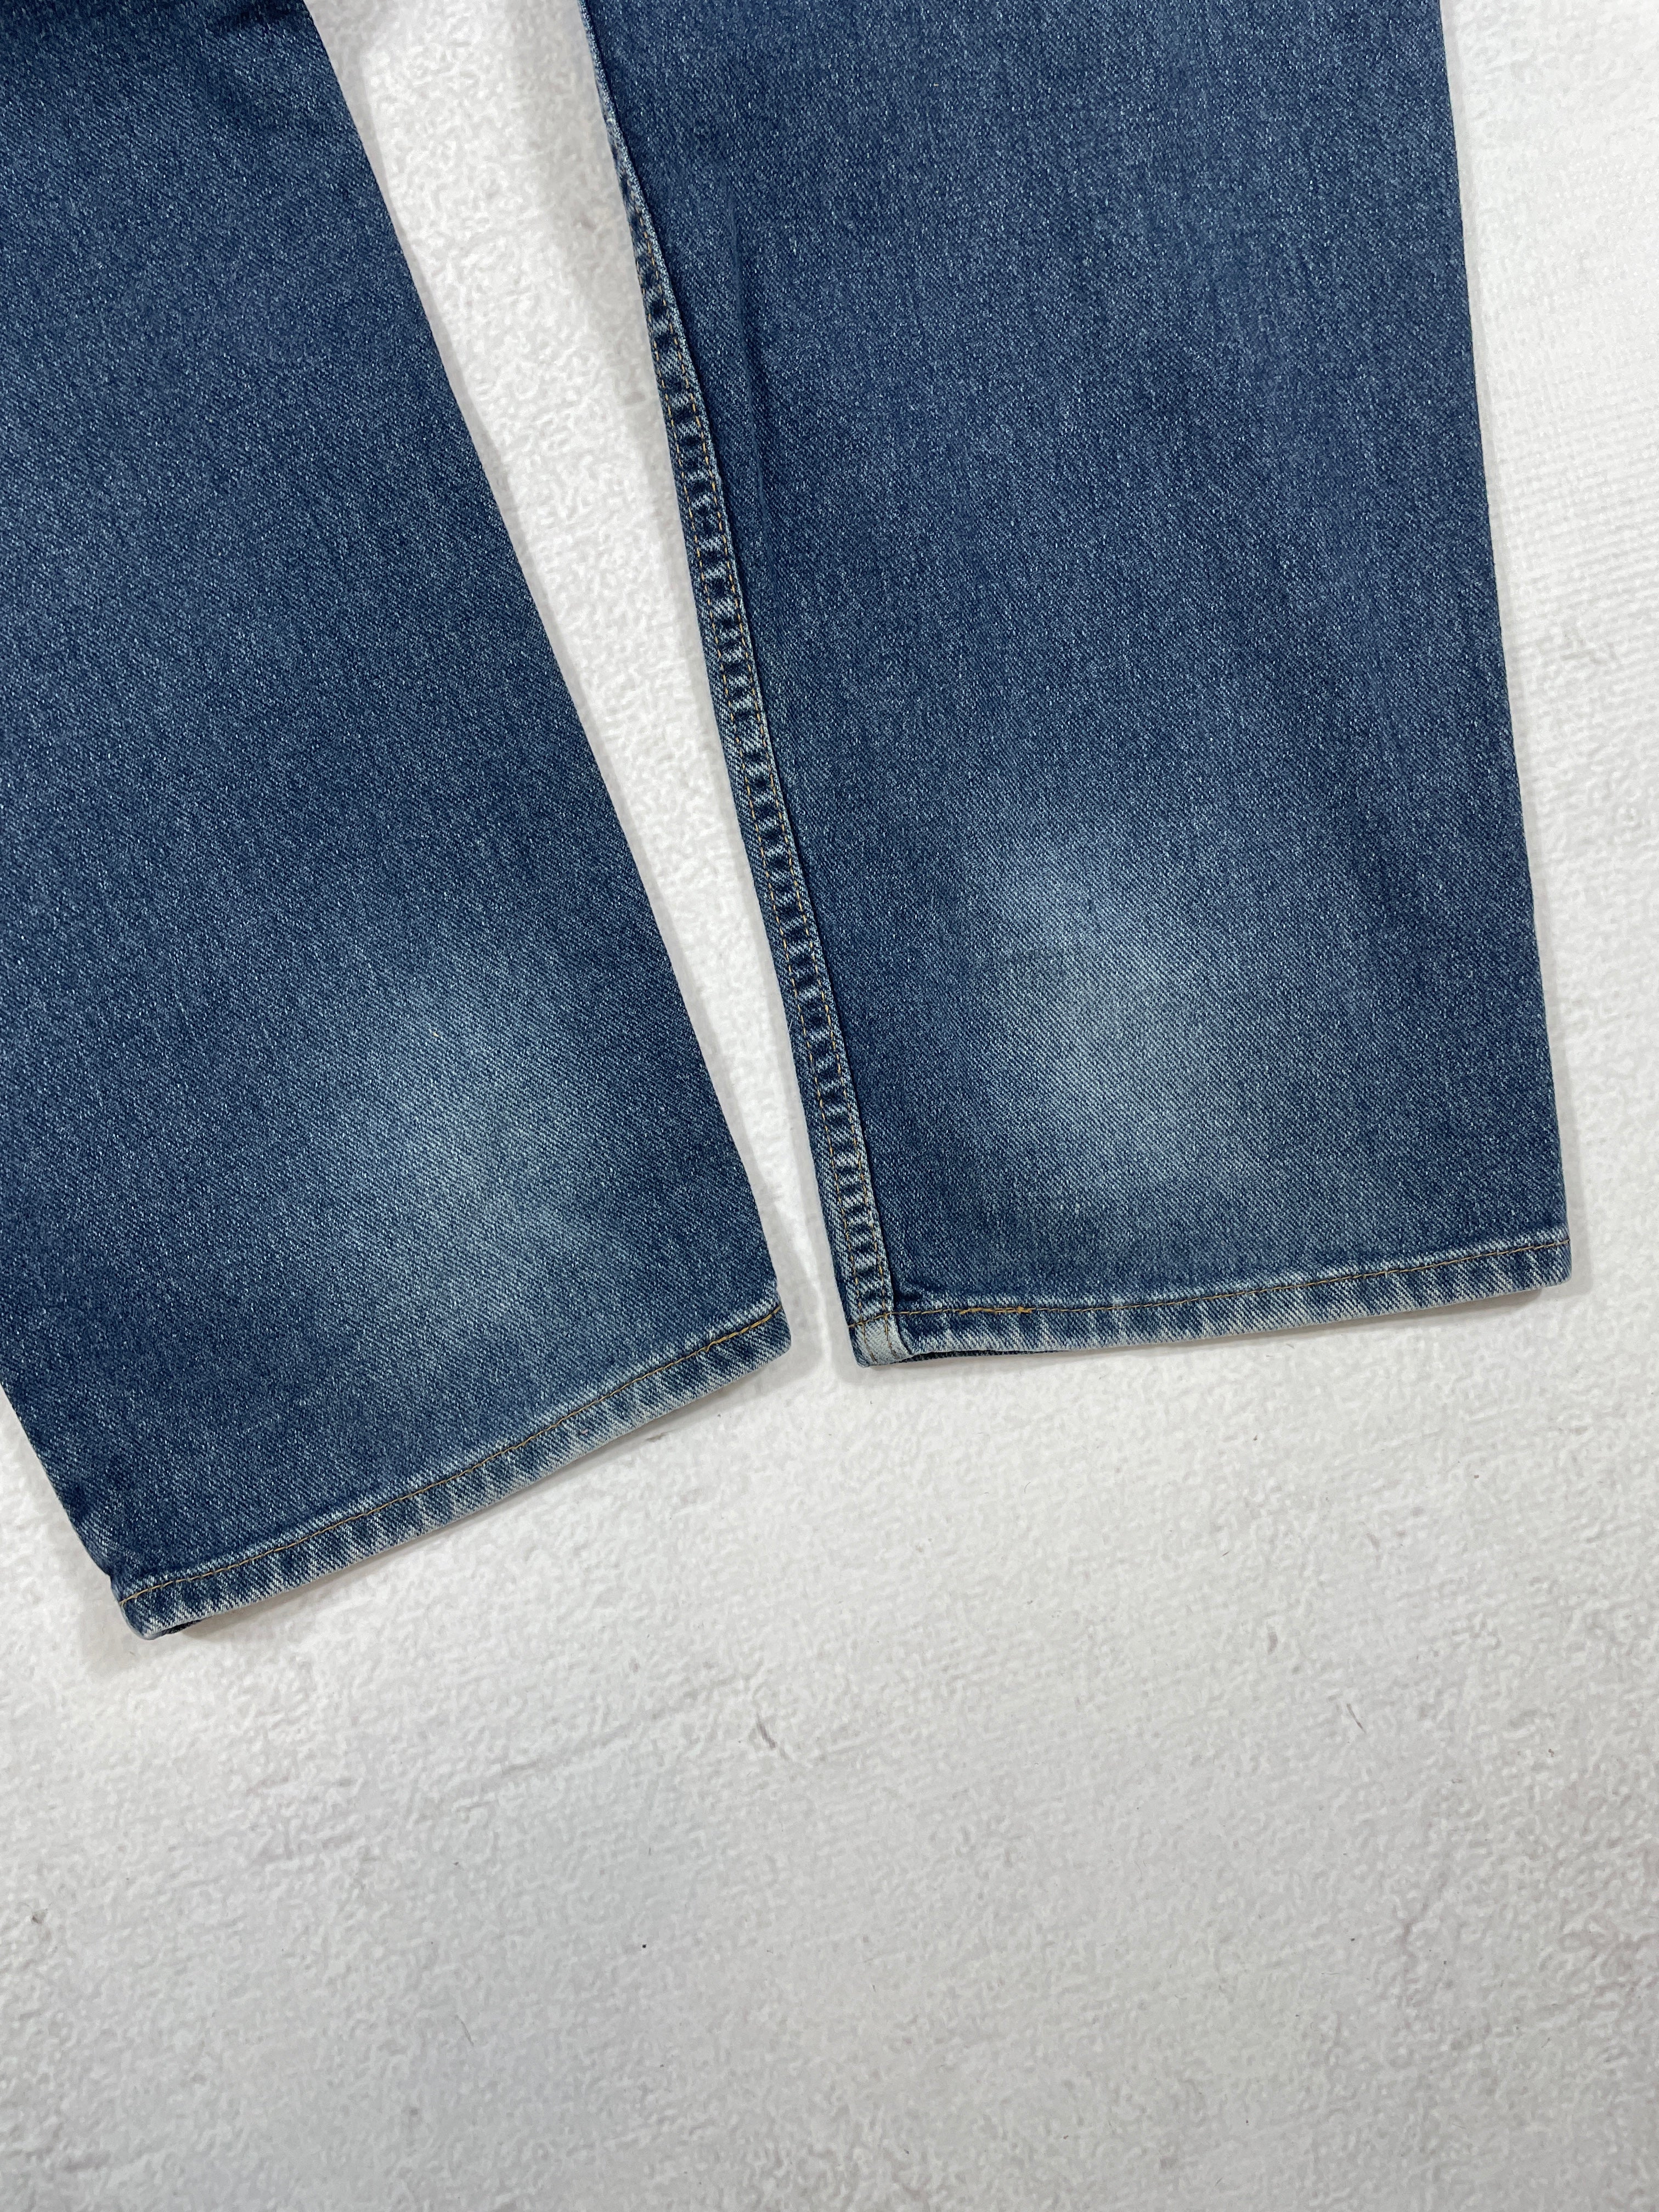 Vintage Tommy Hilfiger Jeans - Men's 36Wx32L